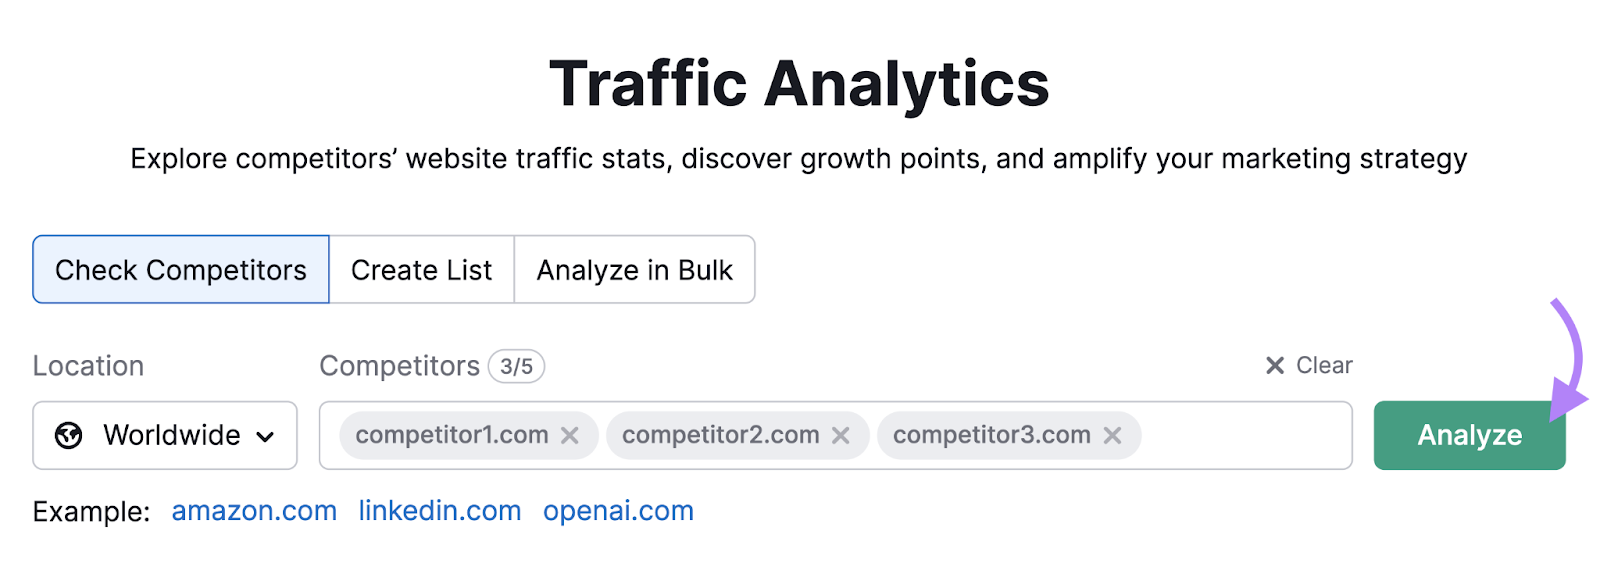 Search barroom  successful  Traffic Analytics tool